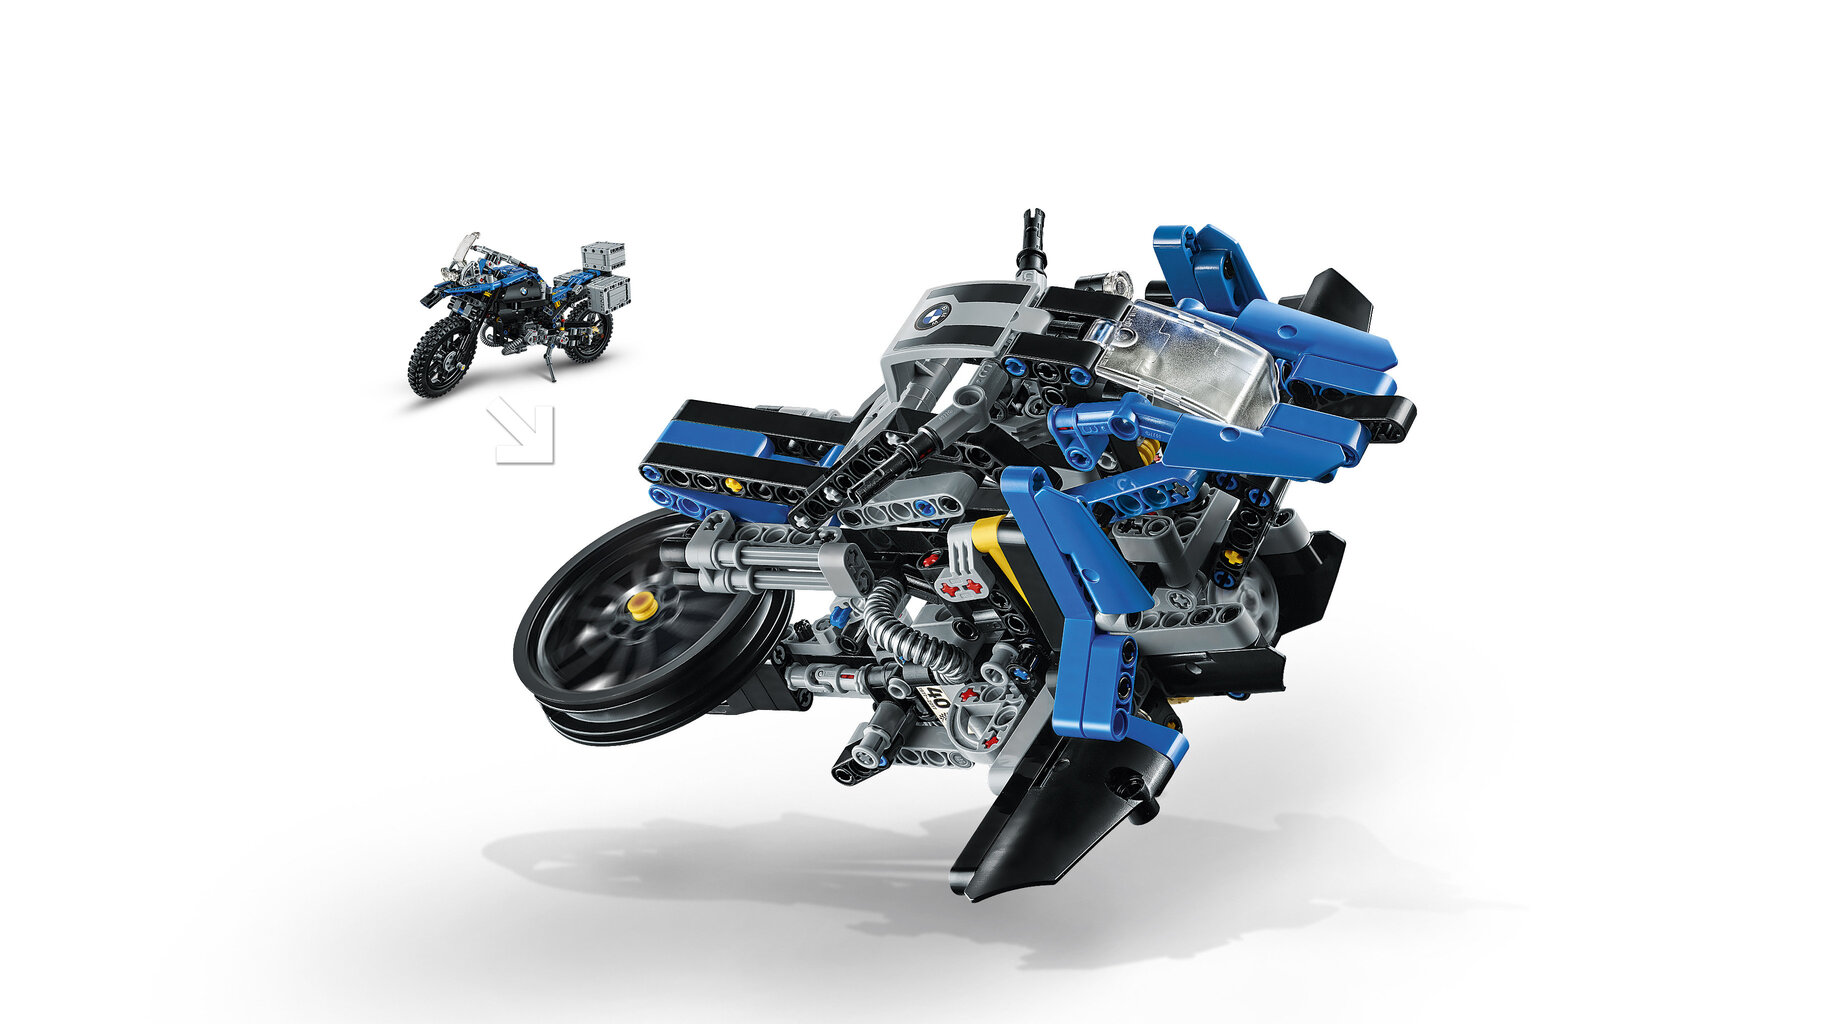 42063 LEGO® Technic BMW R 1200 GS kaina ir informacija | Konstruktoriai ir kaladėlės | pigu.lt